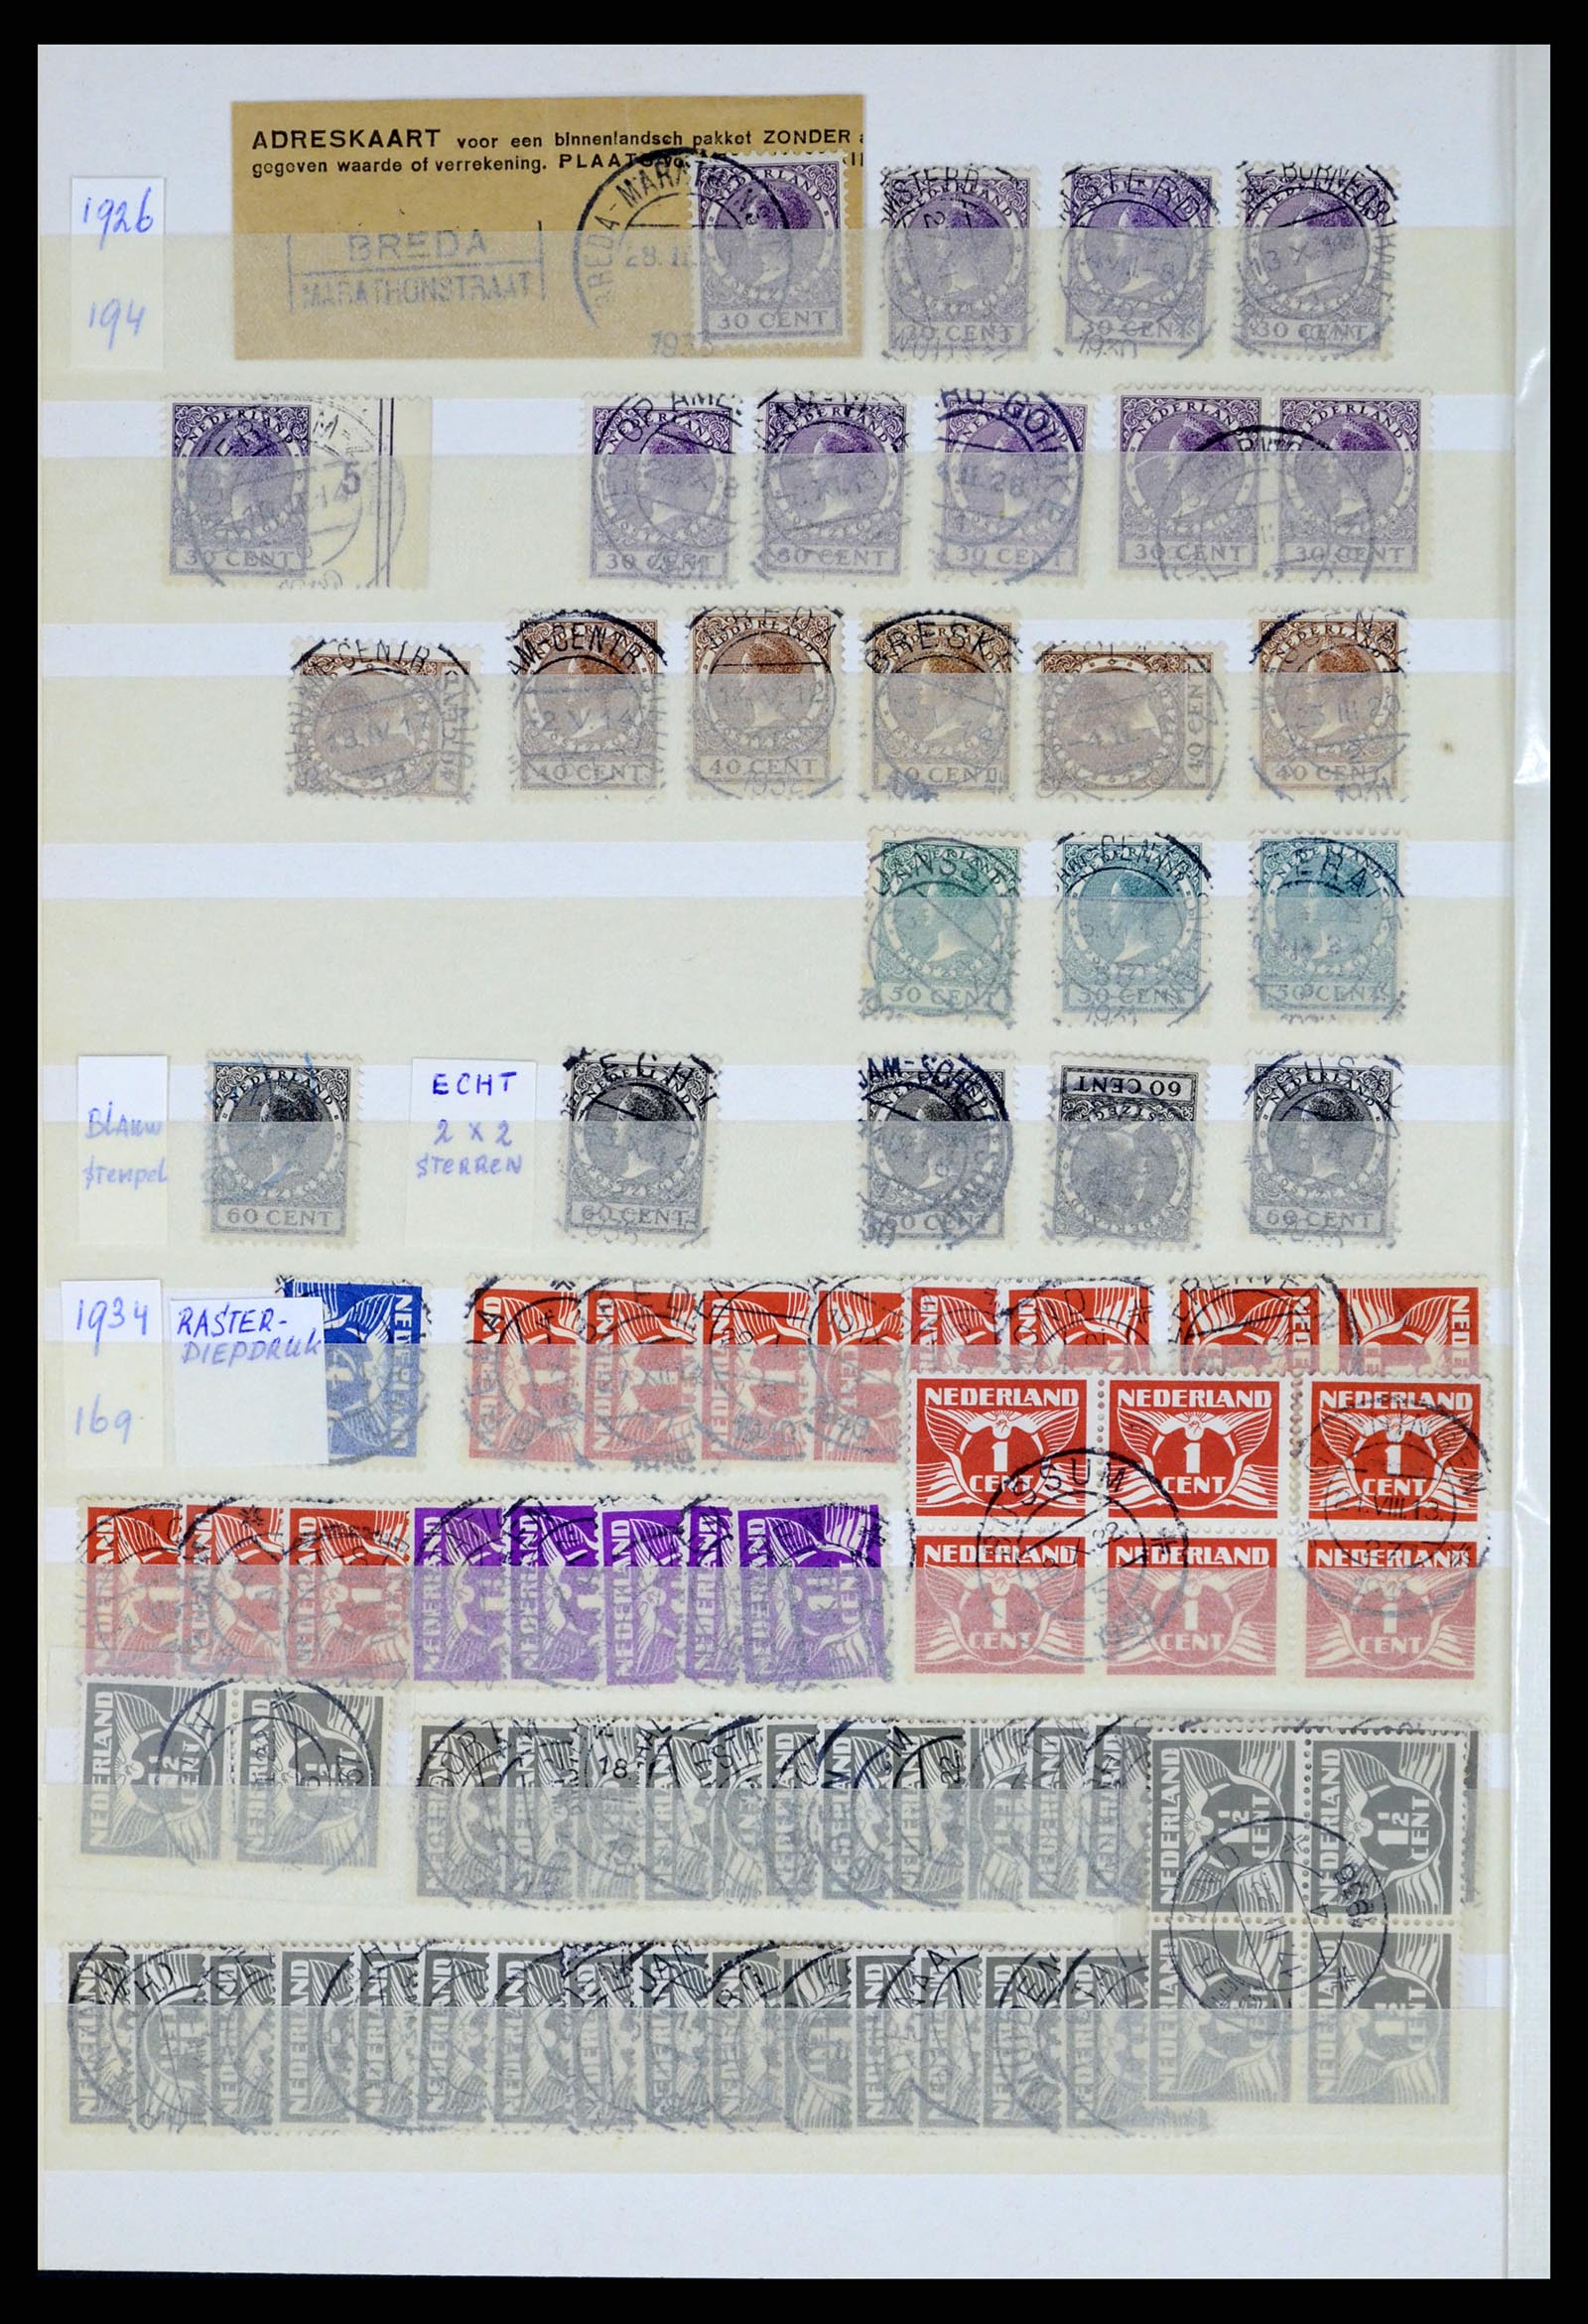 37424 008 - Stamp collection 37424 Netherlands shortbar cancels.